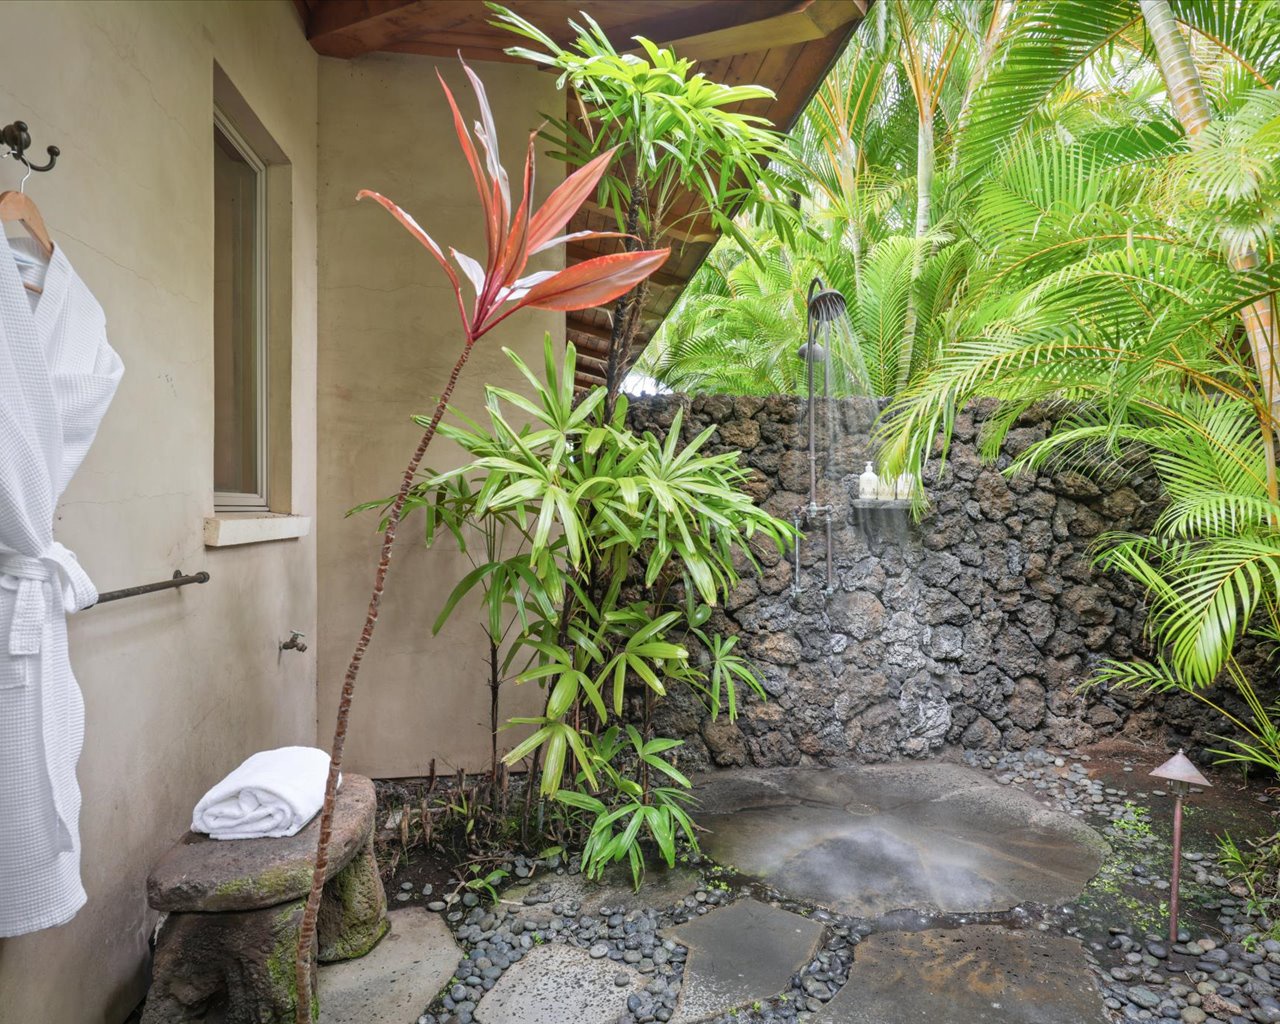 Kailua Kona Vacation Rentals, 3BD Pakui Street (131) Estate Home at Four Seasons Resort at Hualalai - Garden shower exclusive to the third bathroom